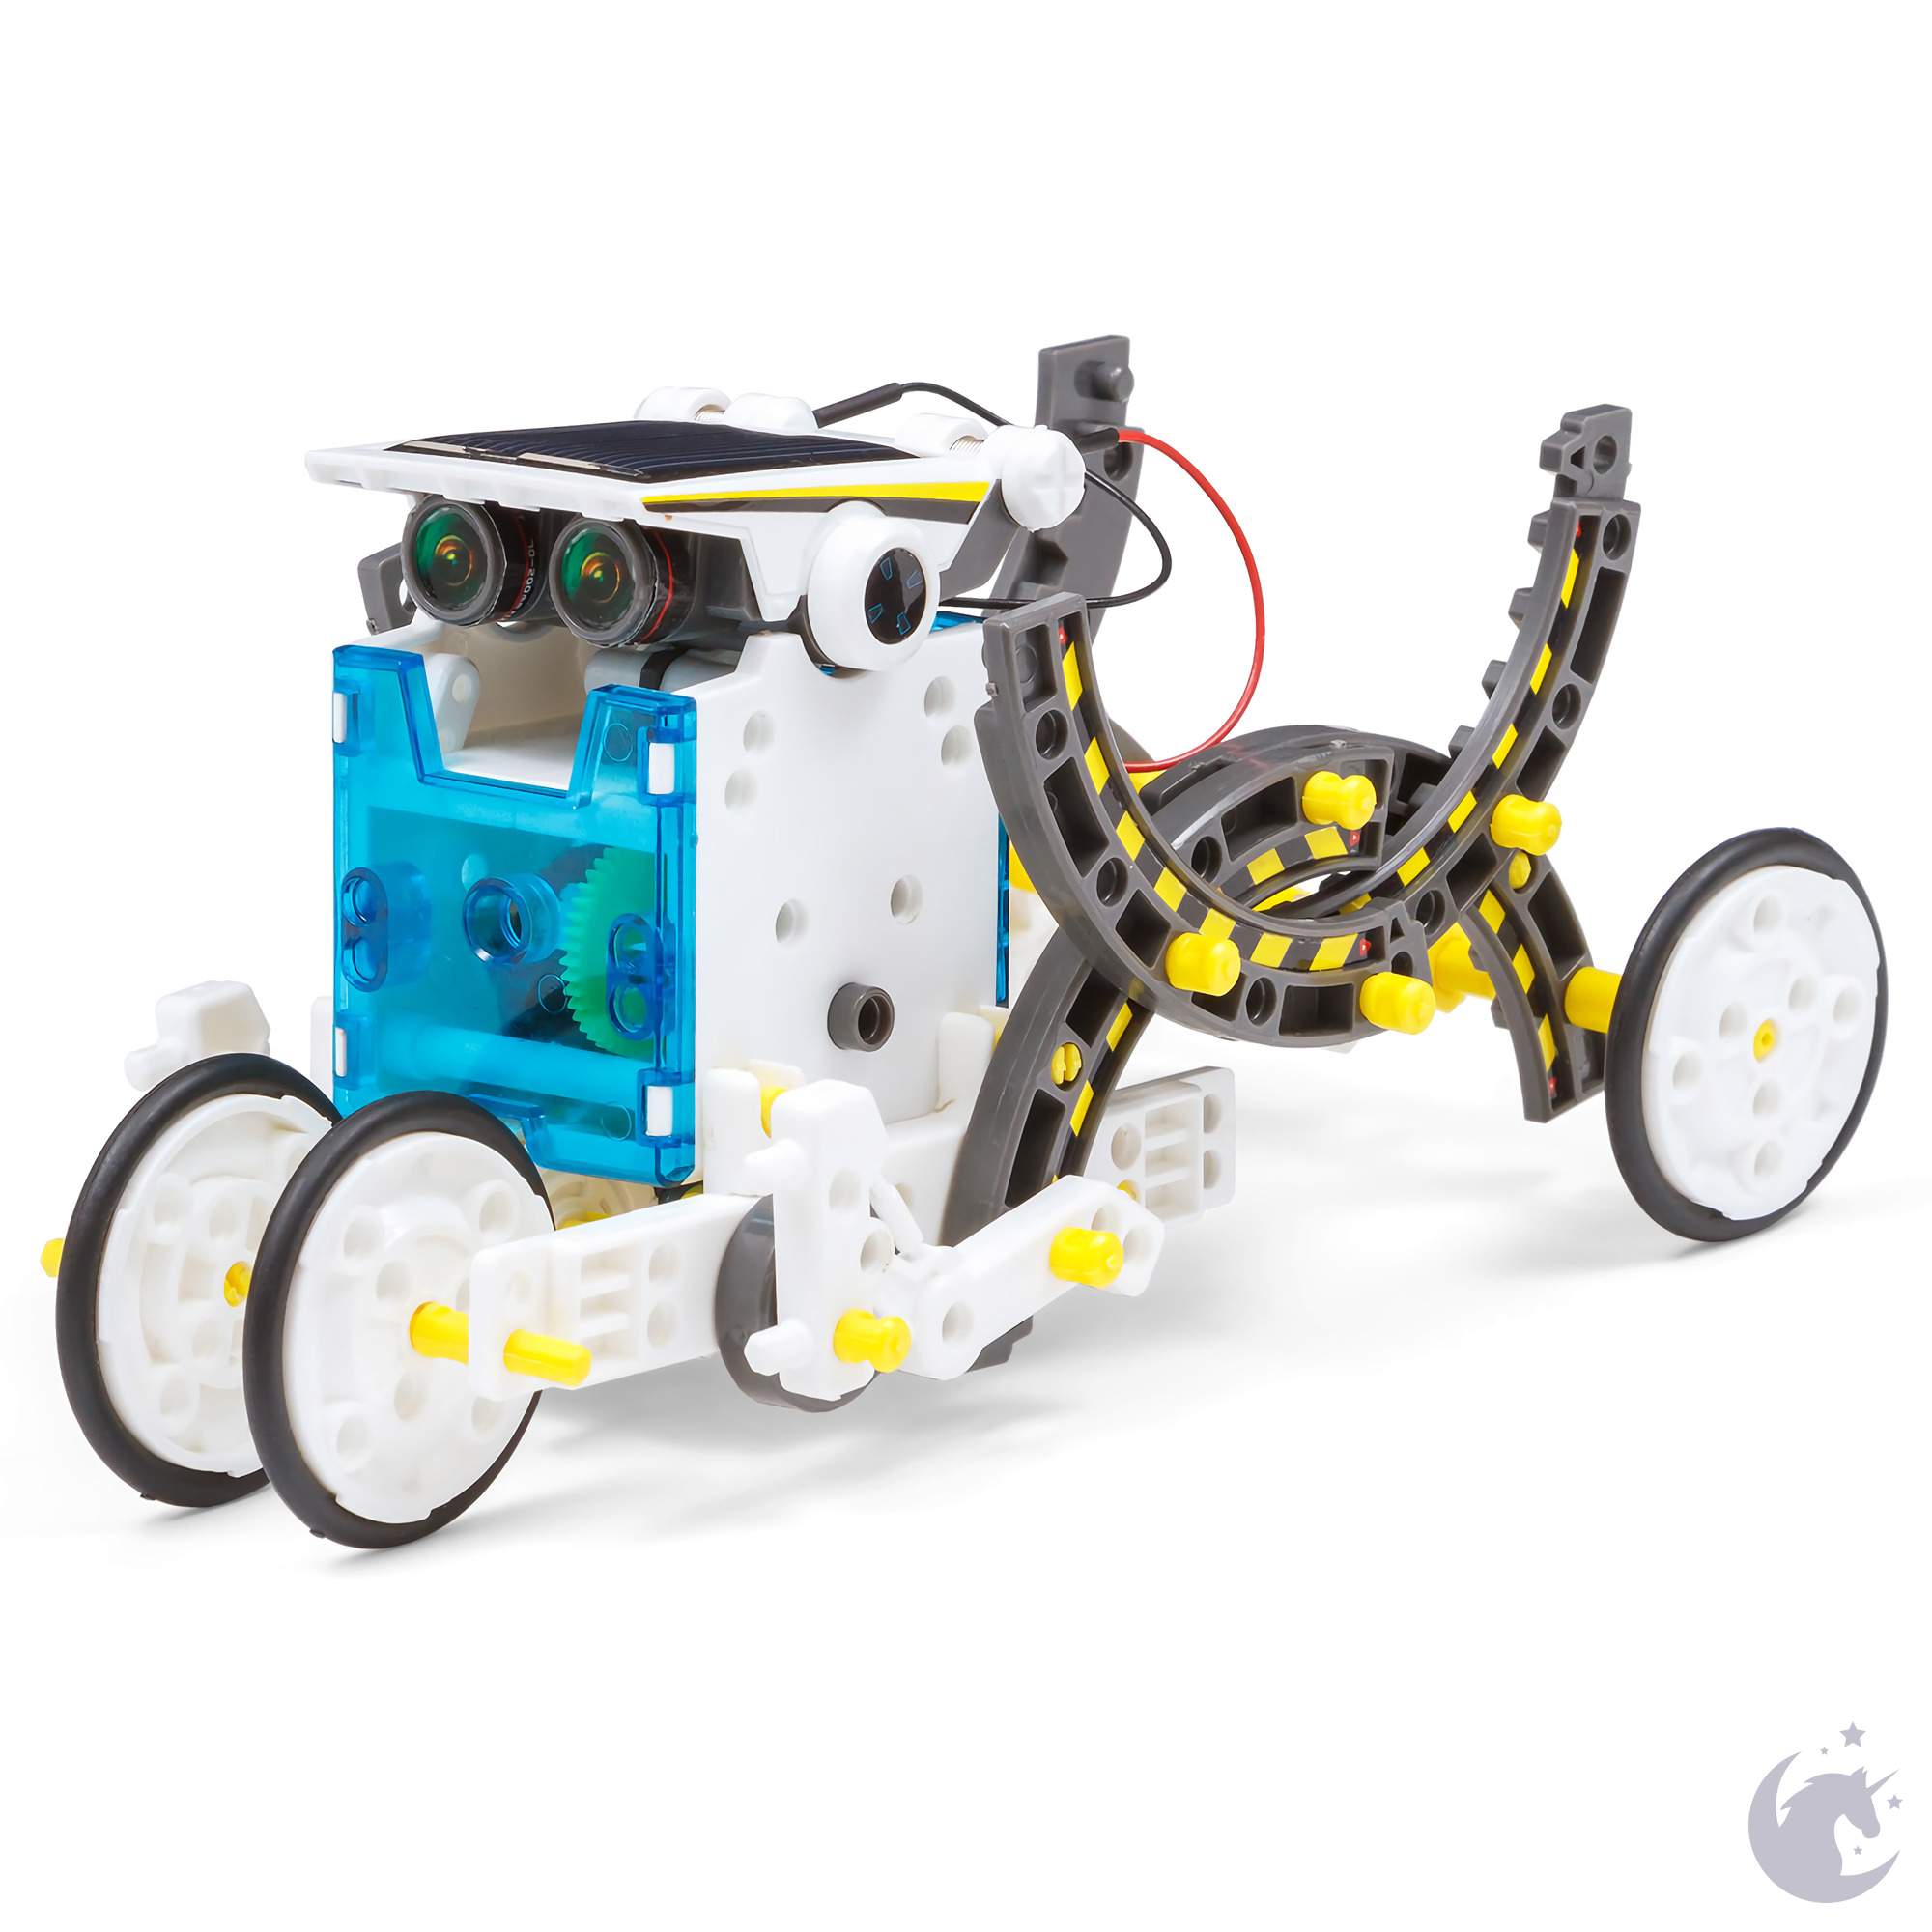 unicorntoys cic kits 14 in 1 educational solar robot kit engineering stem toys for kids CIC21-615